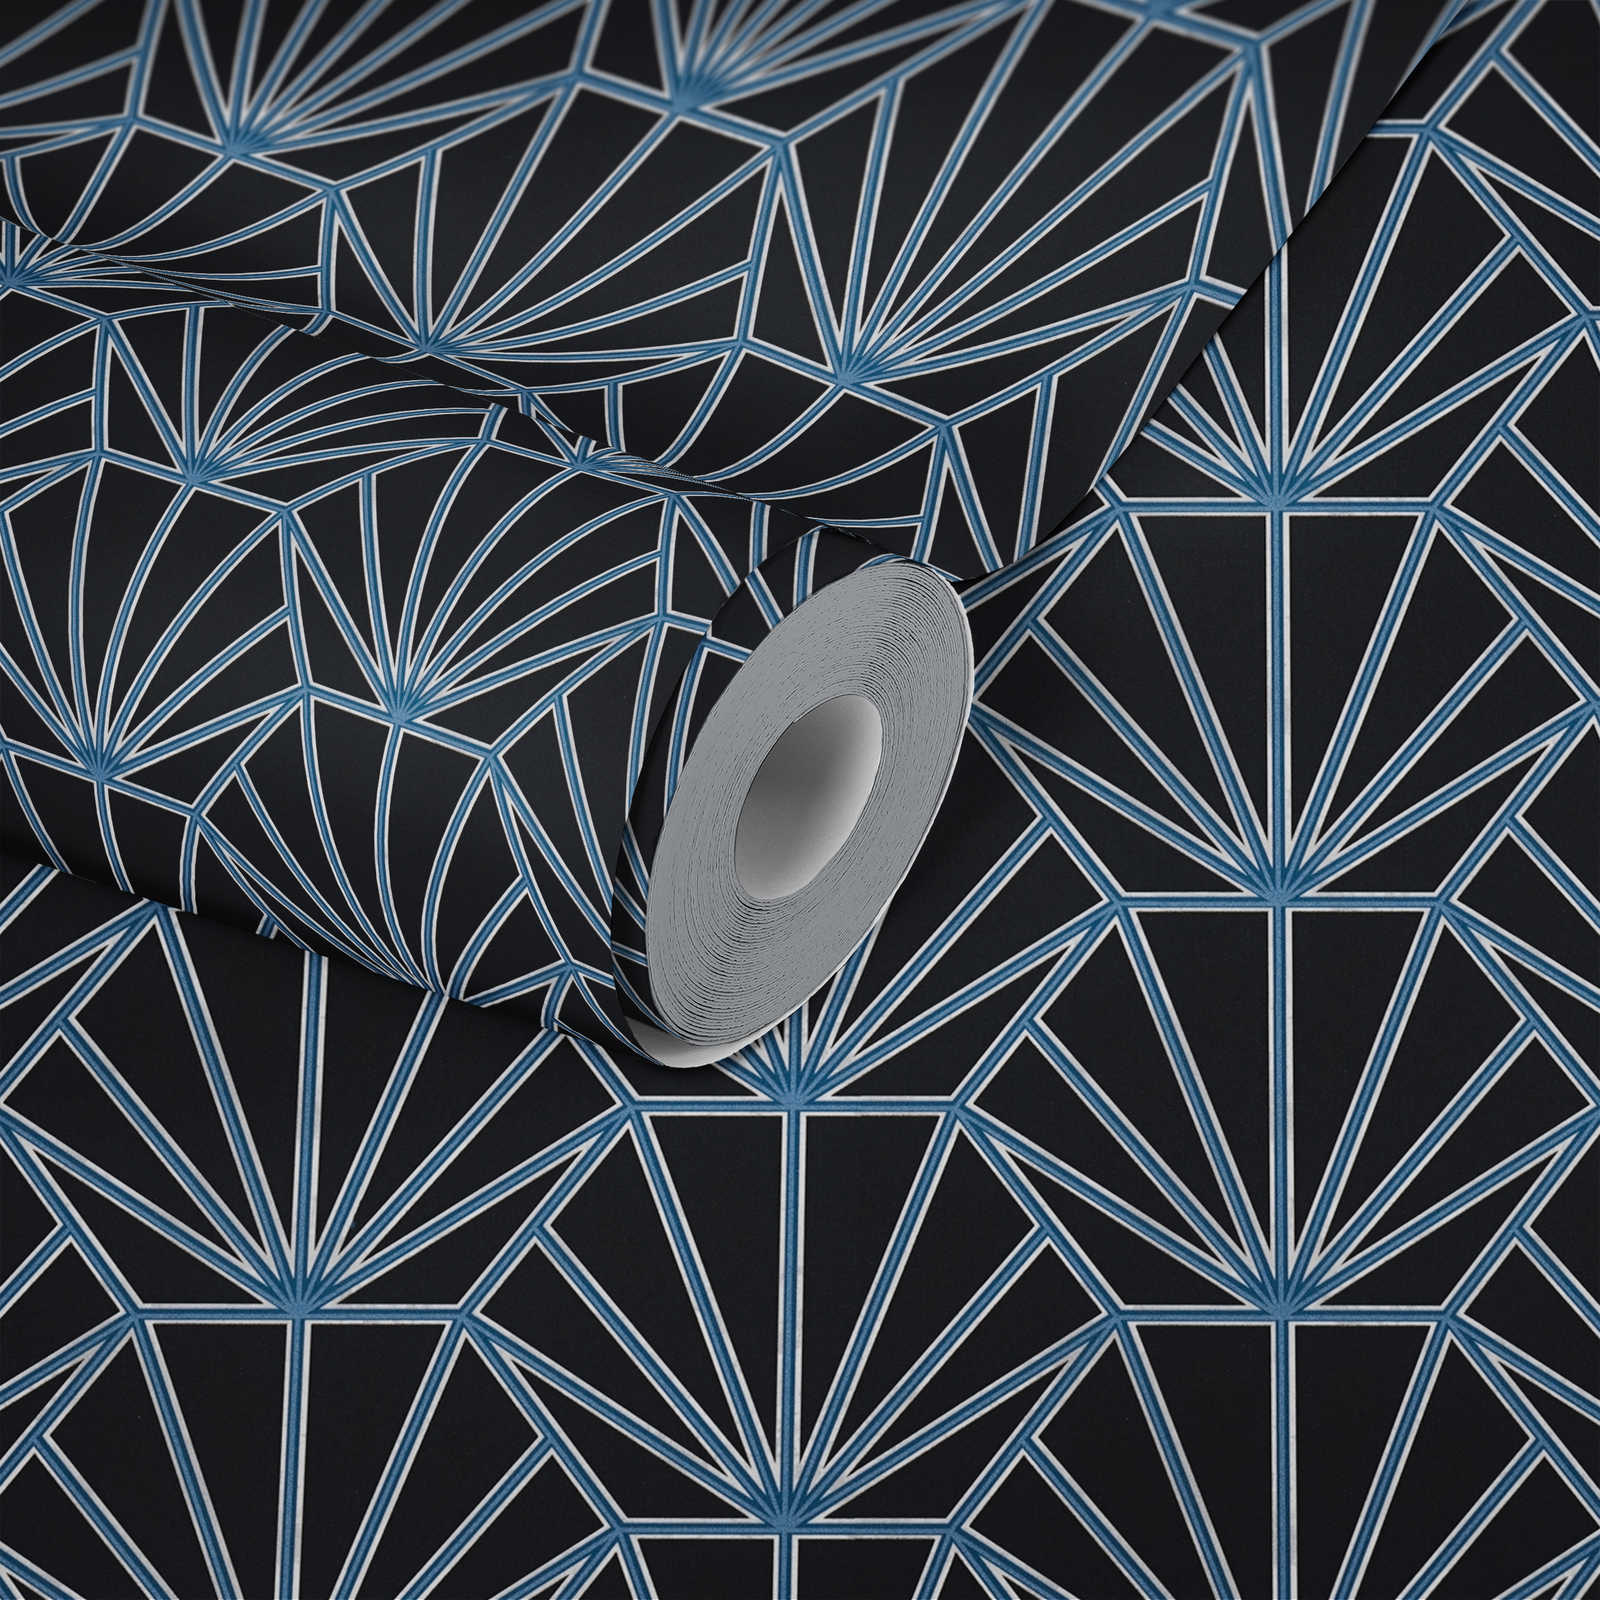             Art deco wallpaper patterned retro look - black, blue, white
        